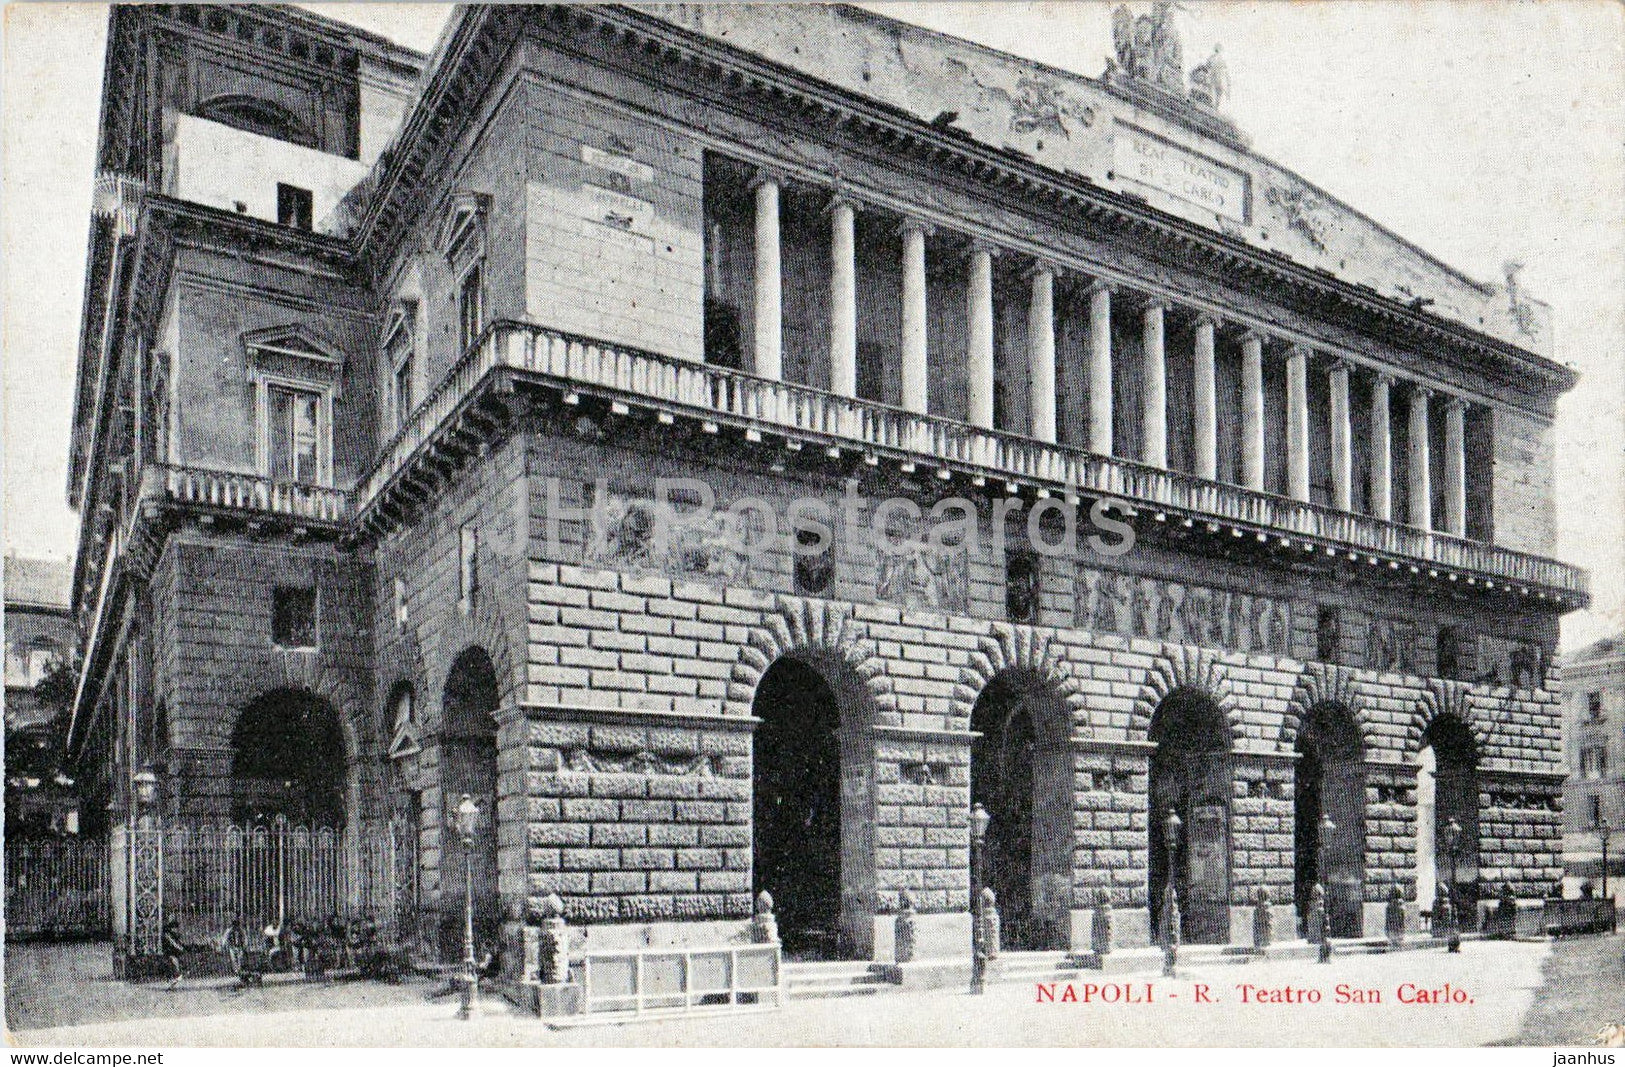 Napoli - R Teatro San Carlo - theatre - old postcard - Italy - unused - JH Postcards